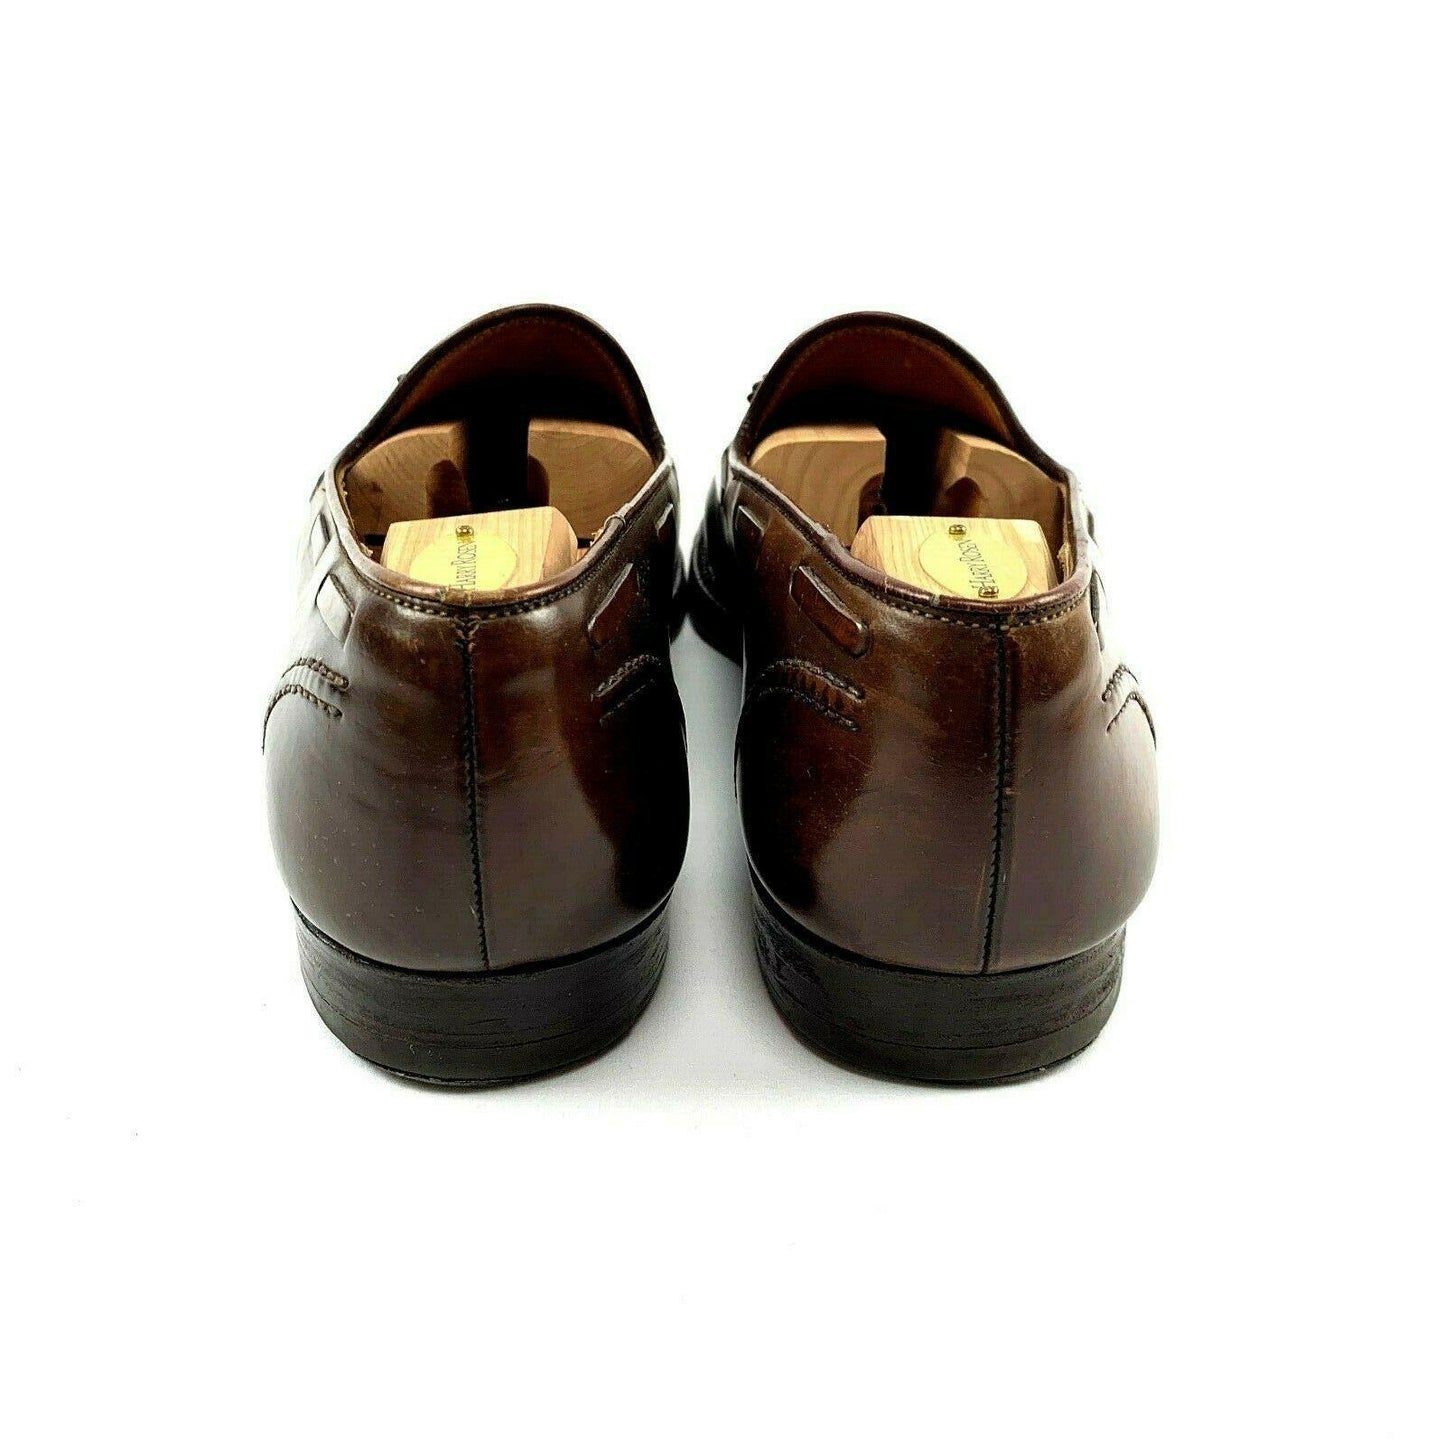 Crockett & Jones x Polo Ralph Lauren Brown Shell Cordovan Tassel Loafer Dress Shoe 11.5 D US - Genuine Design Luxury Consignment